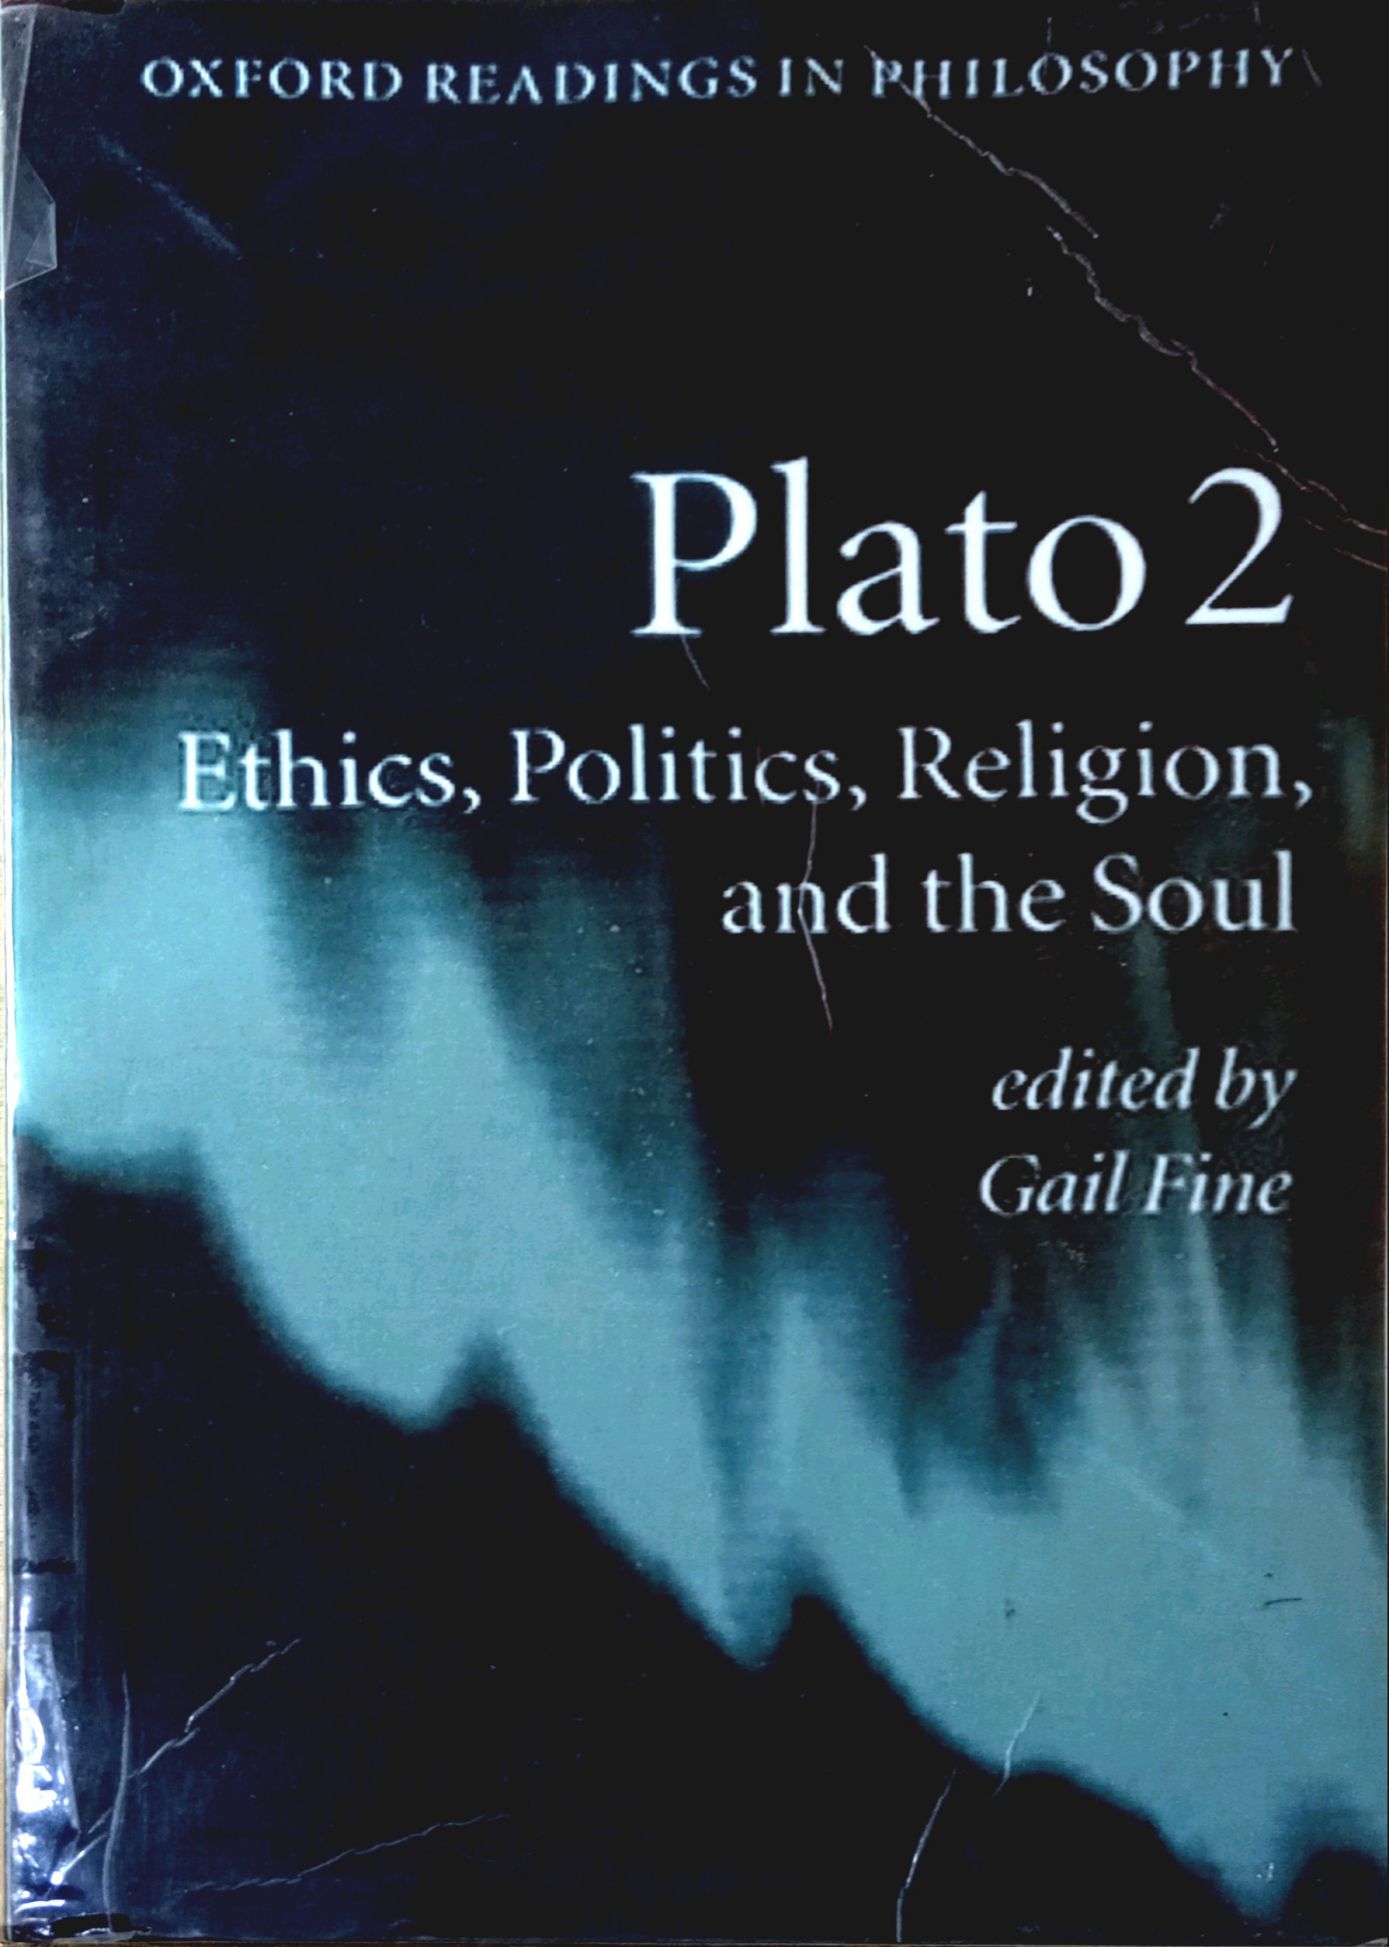 PLATO 2: ETHICS, POLITICS, RELIGION, AND THE SOUL